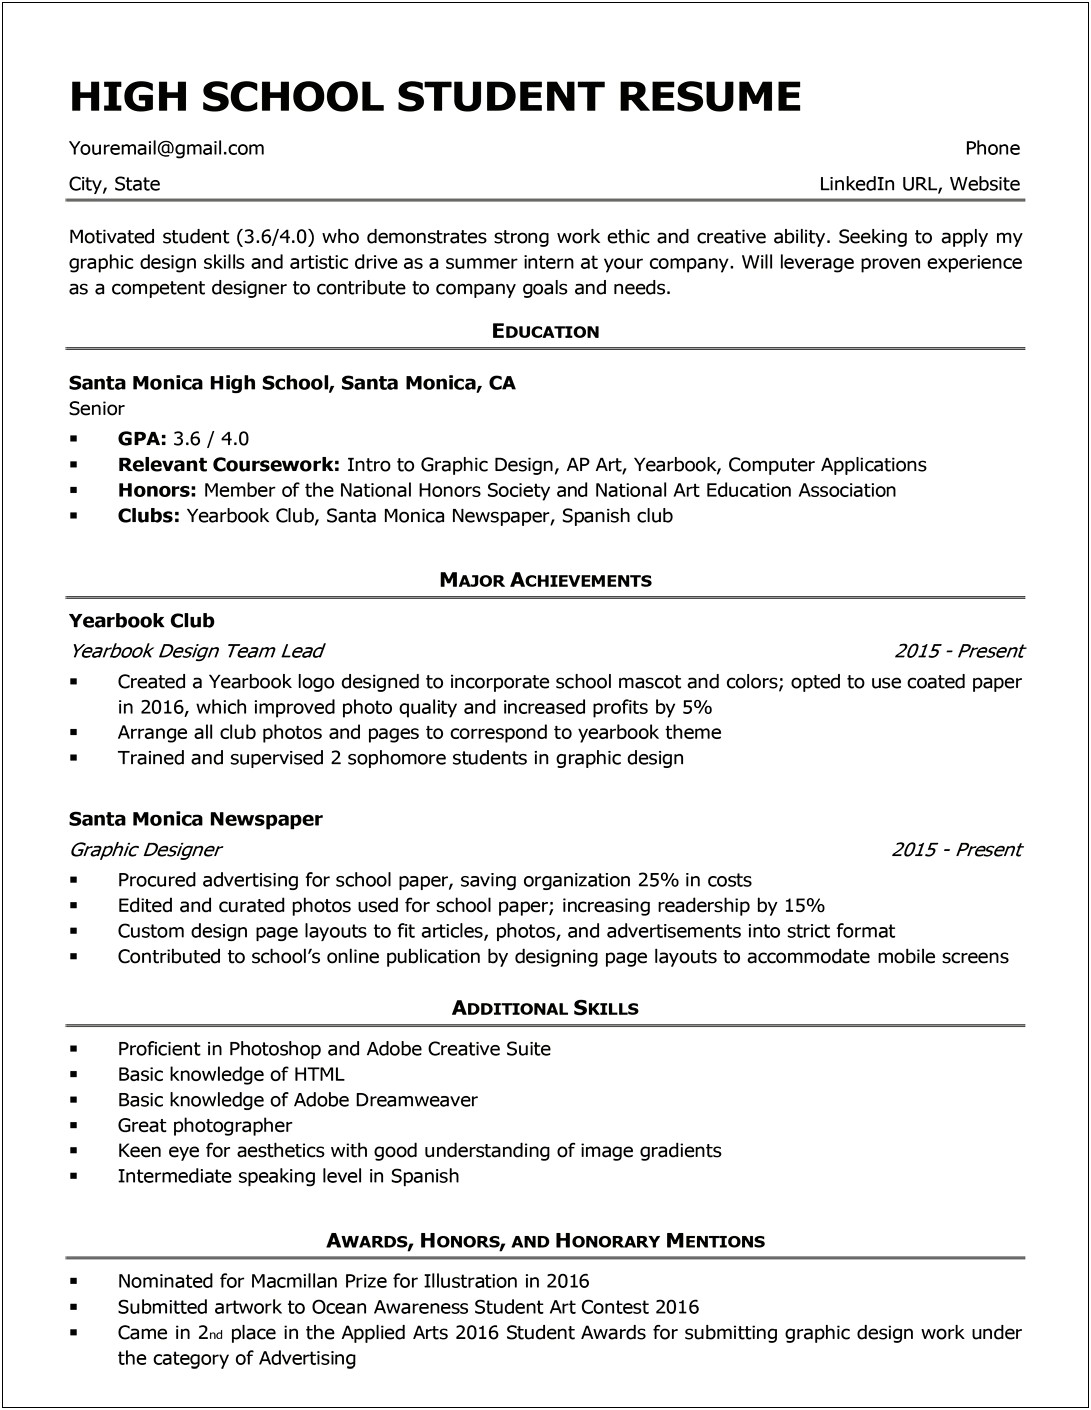 Resume For Computer Job Sample Format